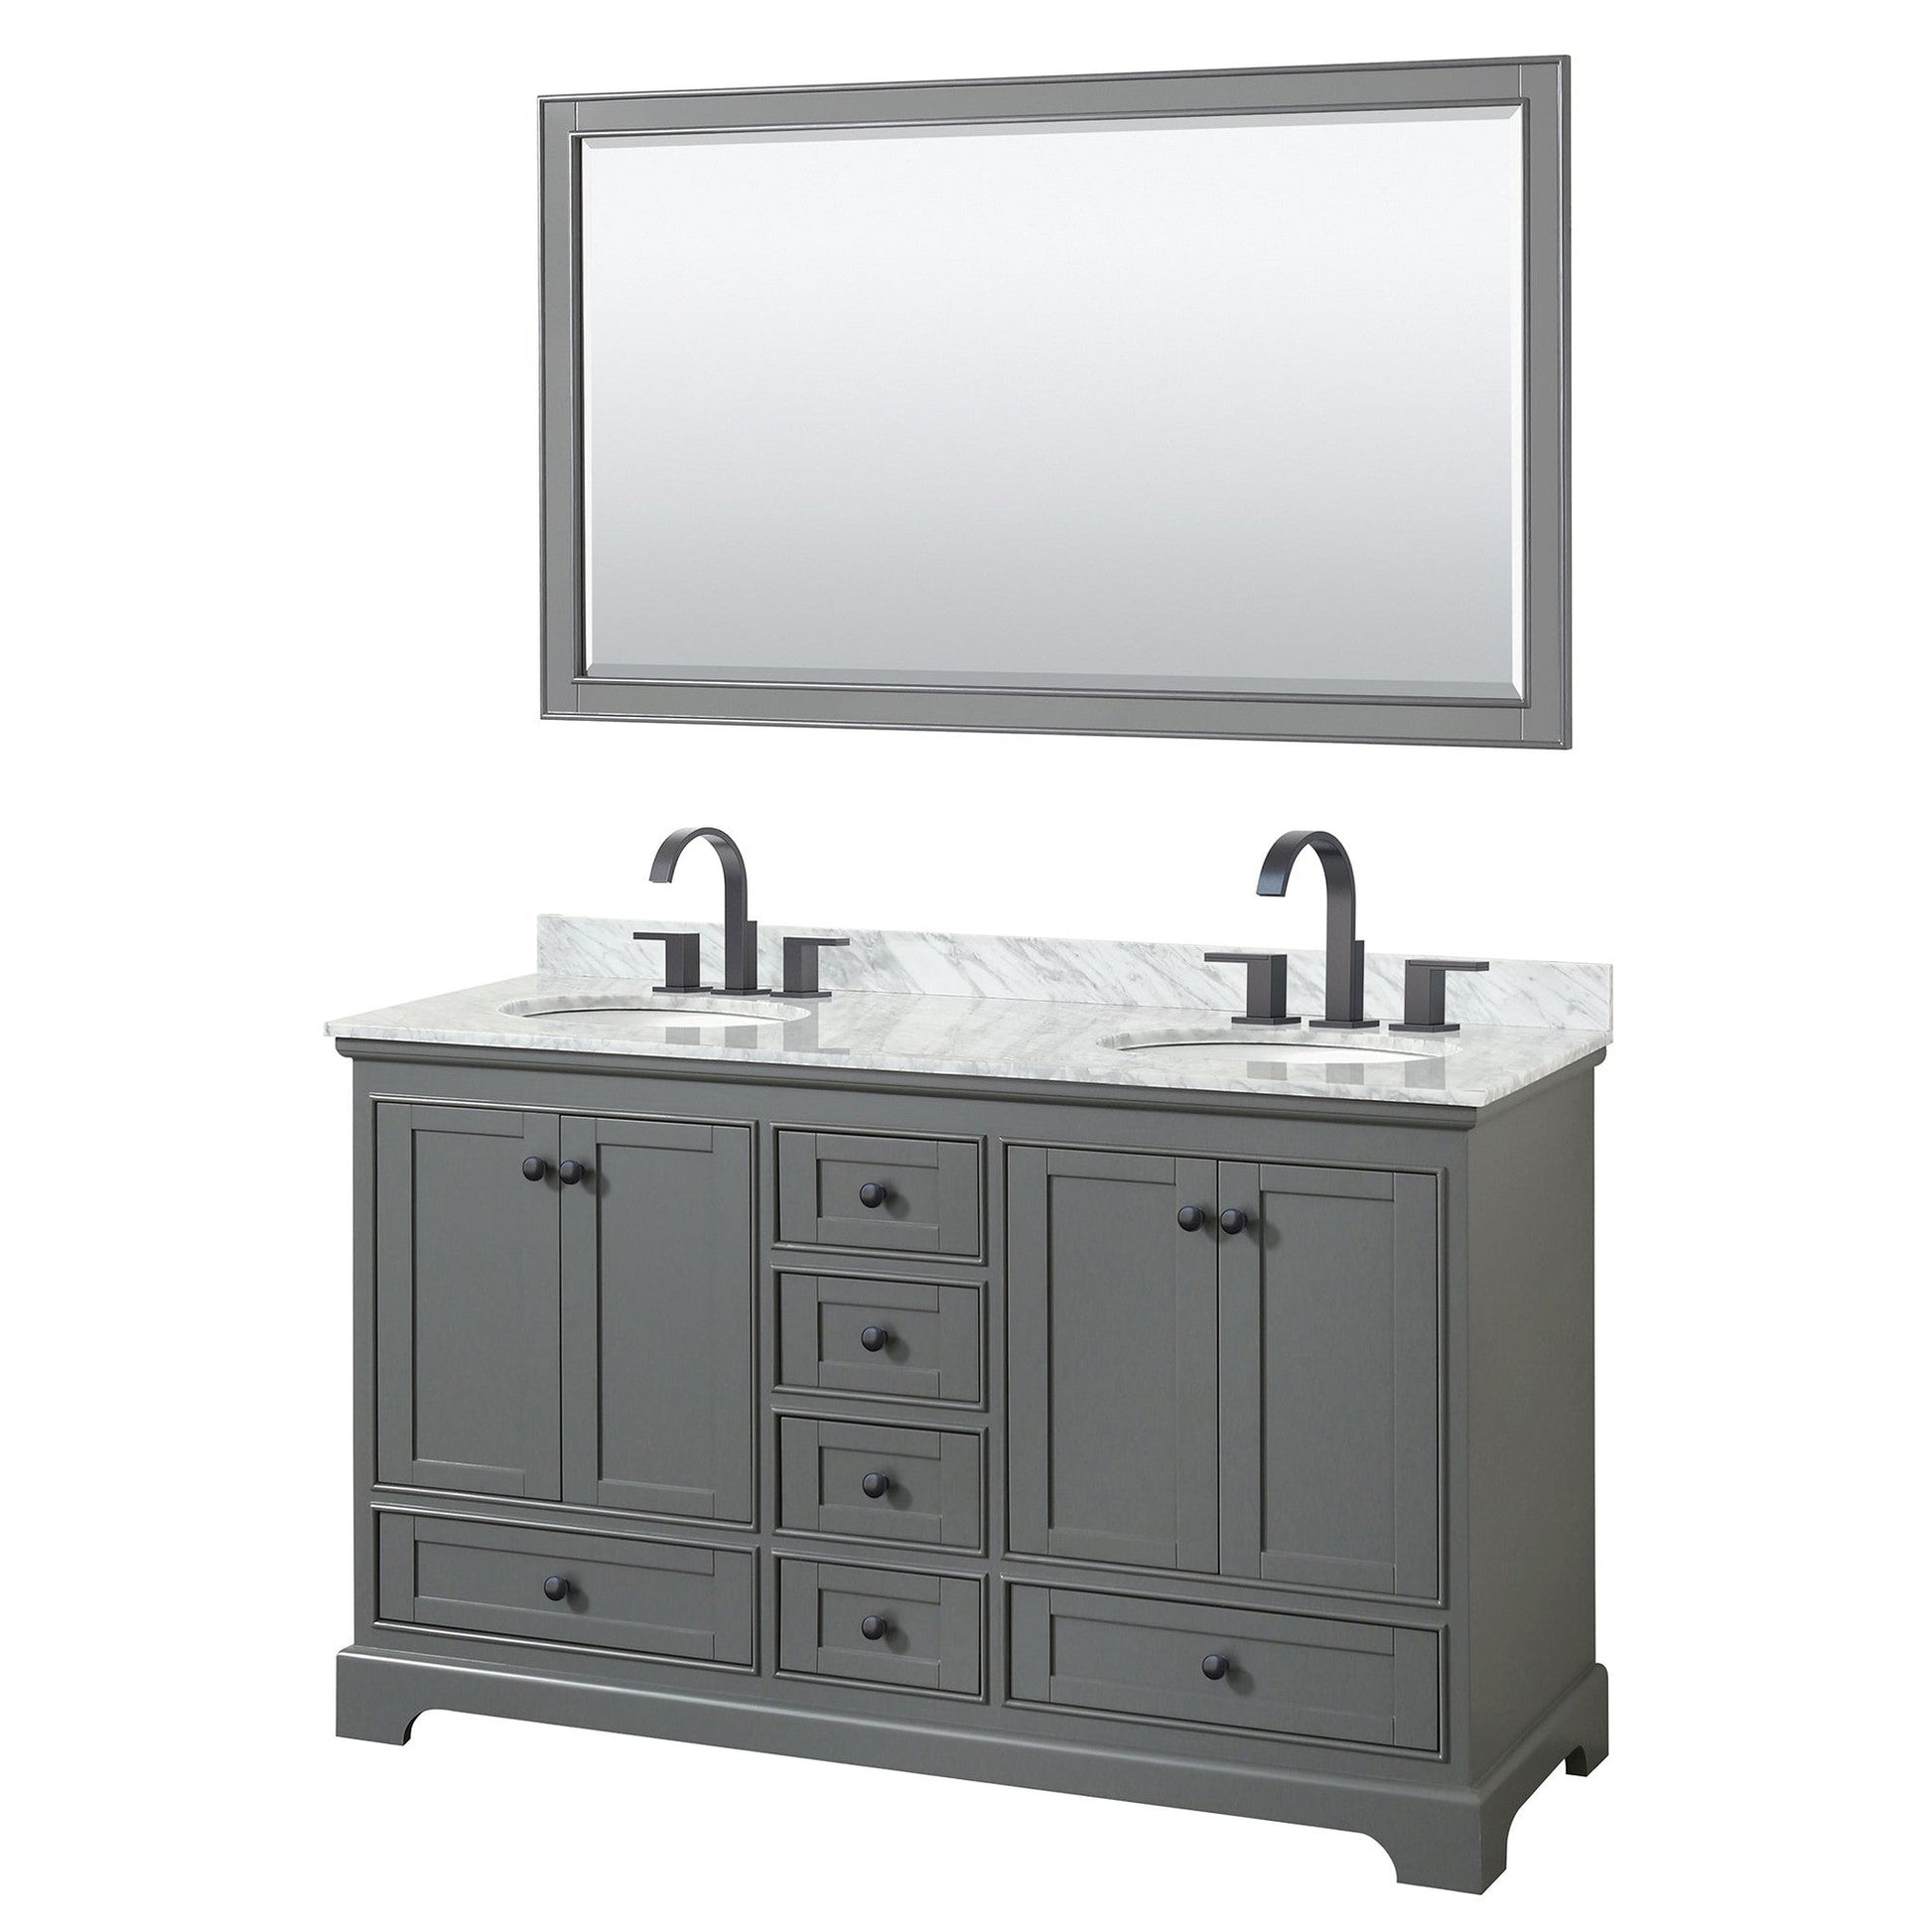 Deborah 60" Double Bathroom Vanity in Dark Gray, White Carrara Marble Countertop, Undermount Oval Sinks, Matte Black Trim, 58" Mirror